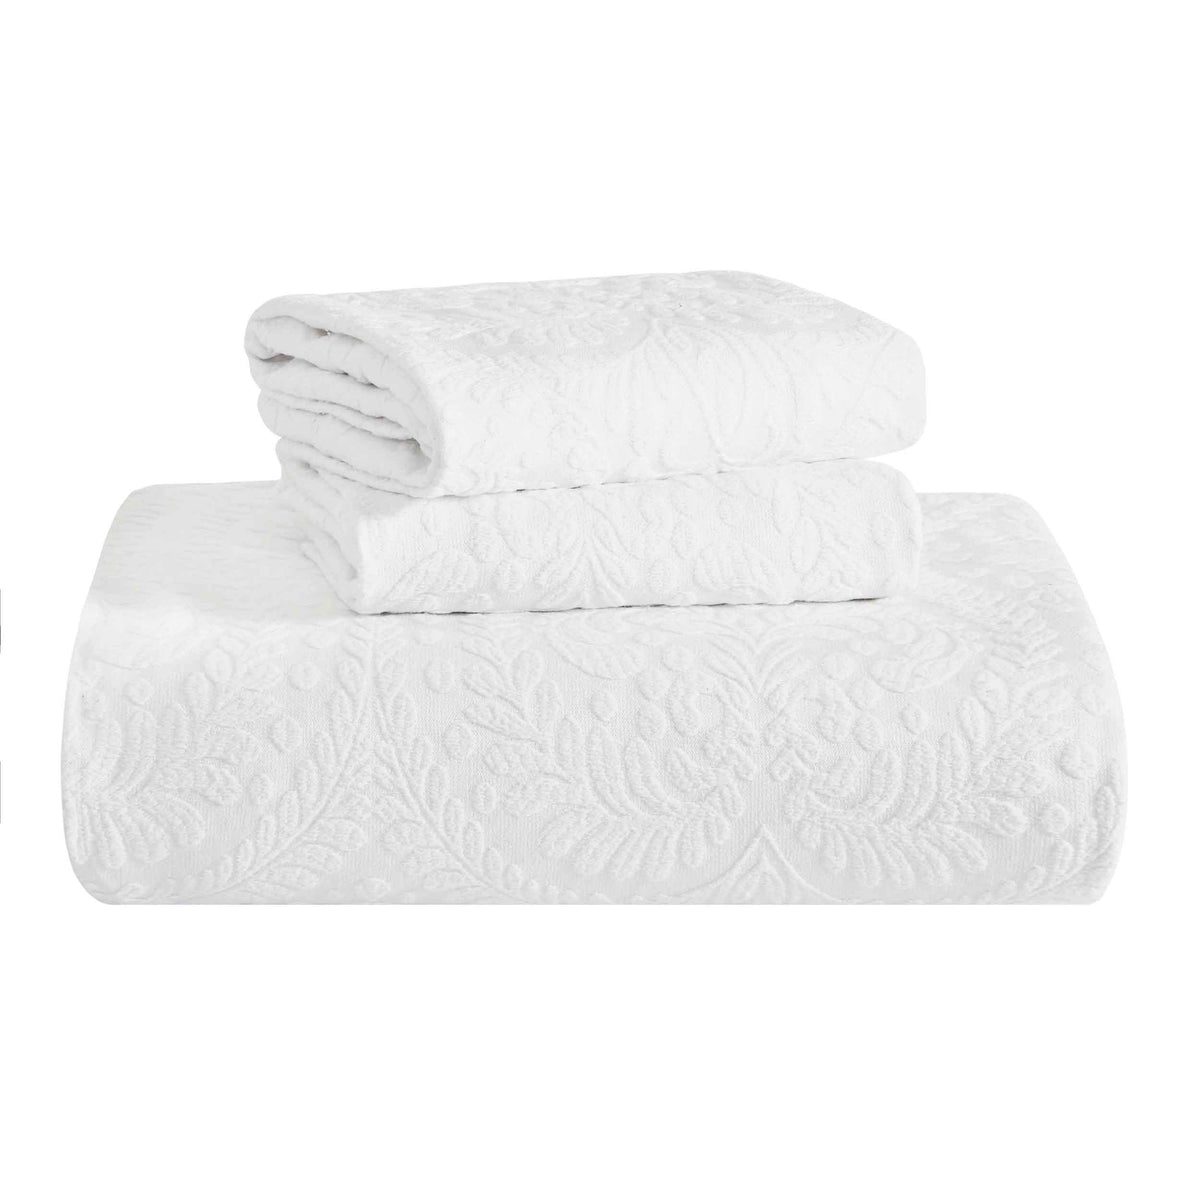 Aspen Cotton Blend Jacquard Floral Scalloped Edge Bedspread Set - White